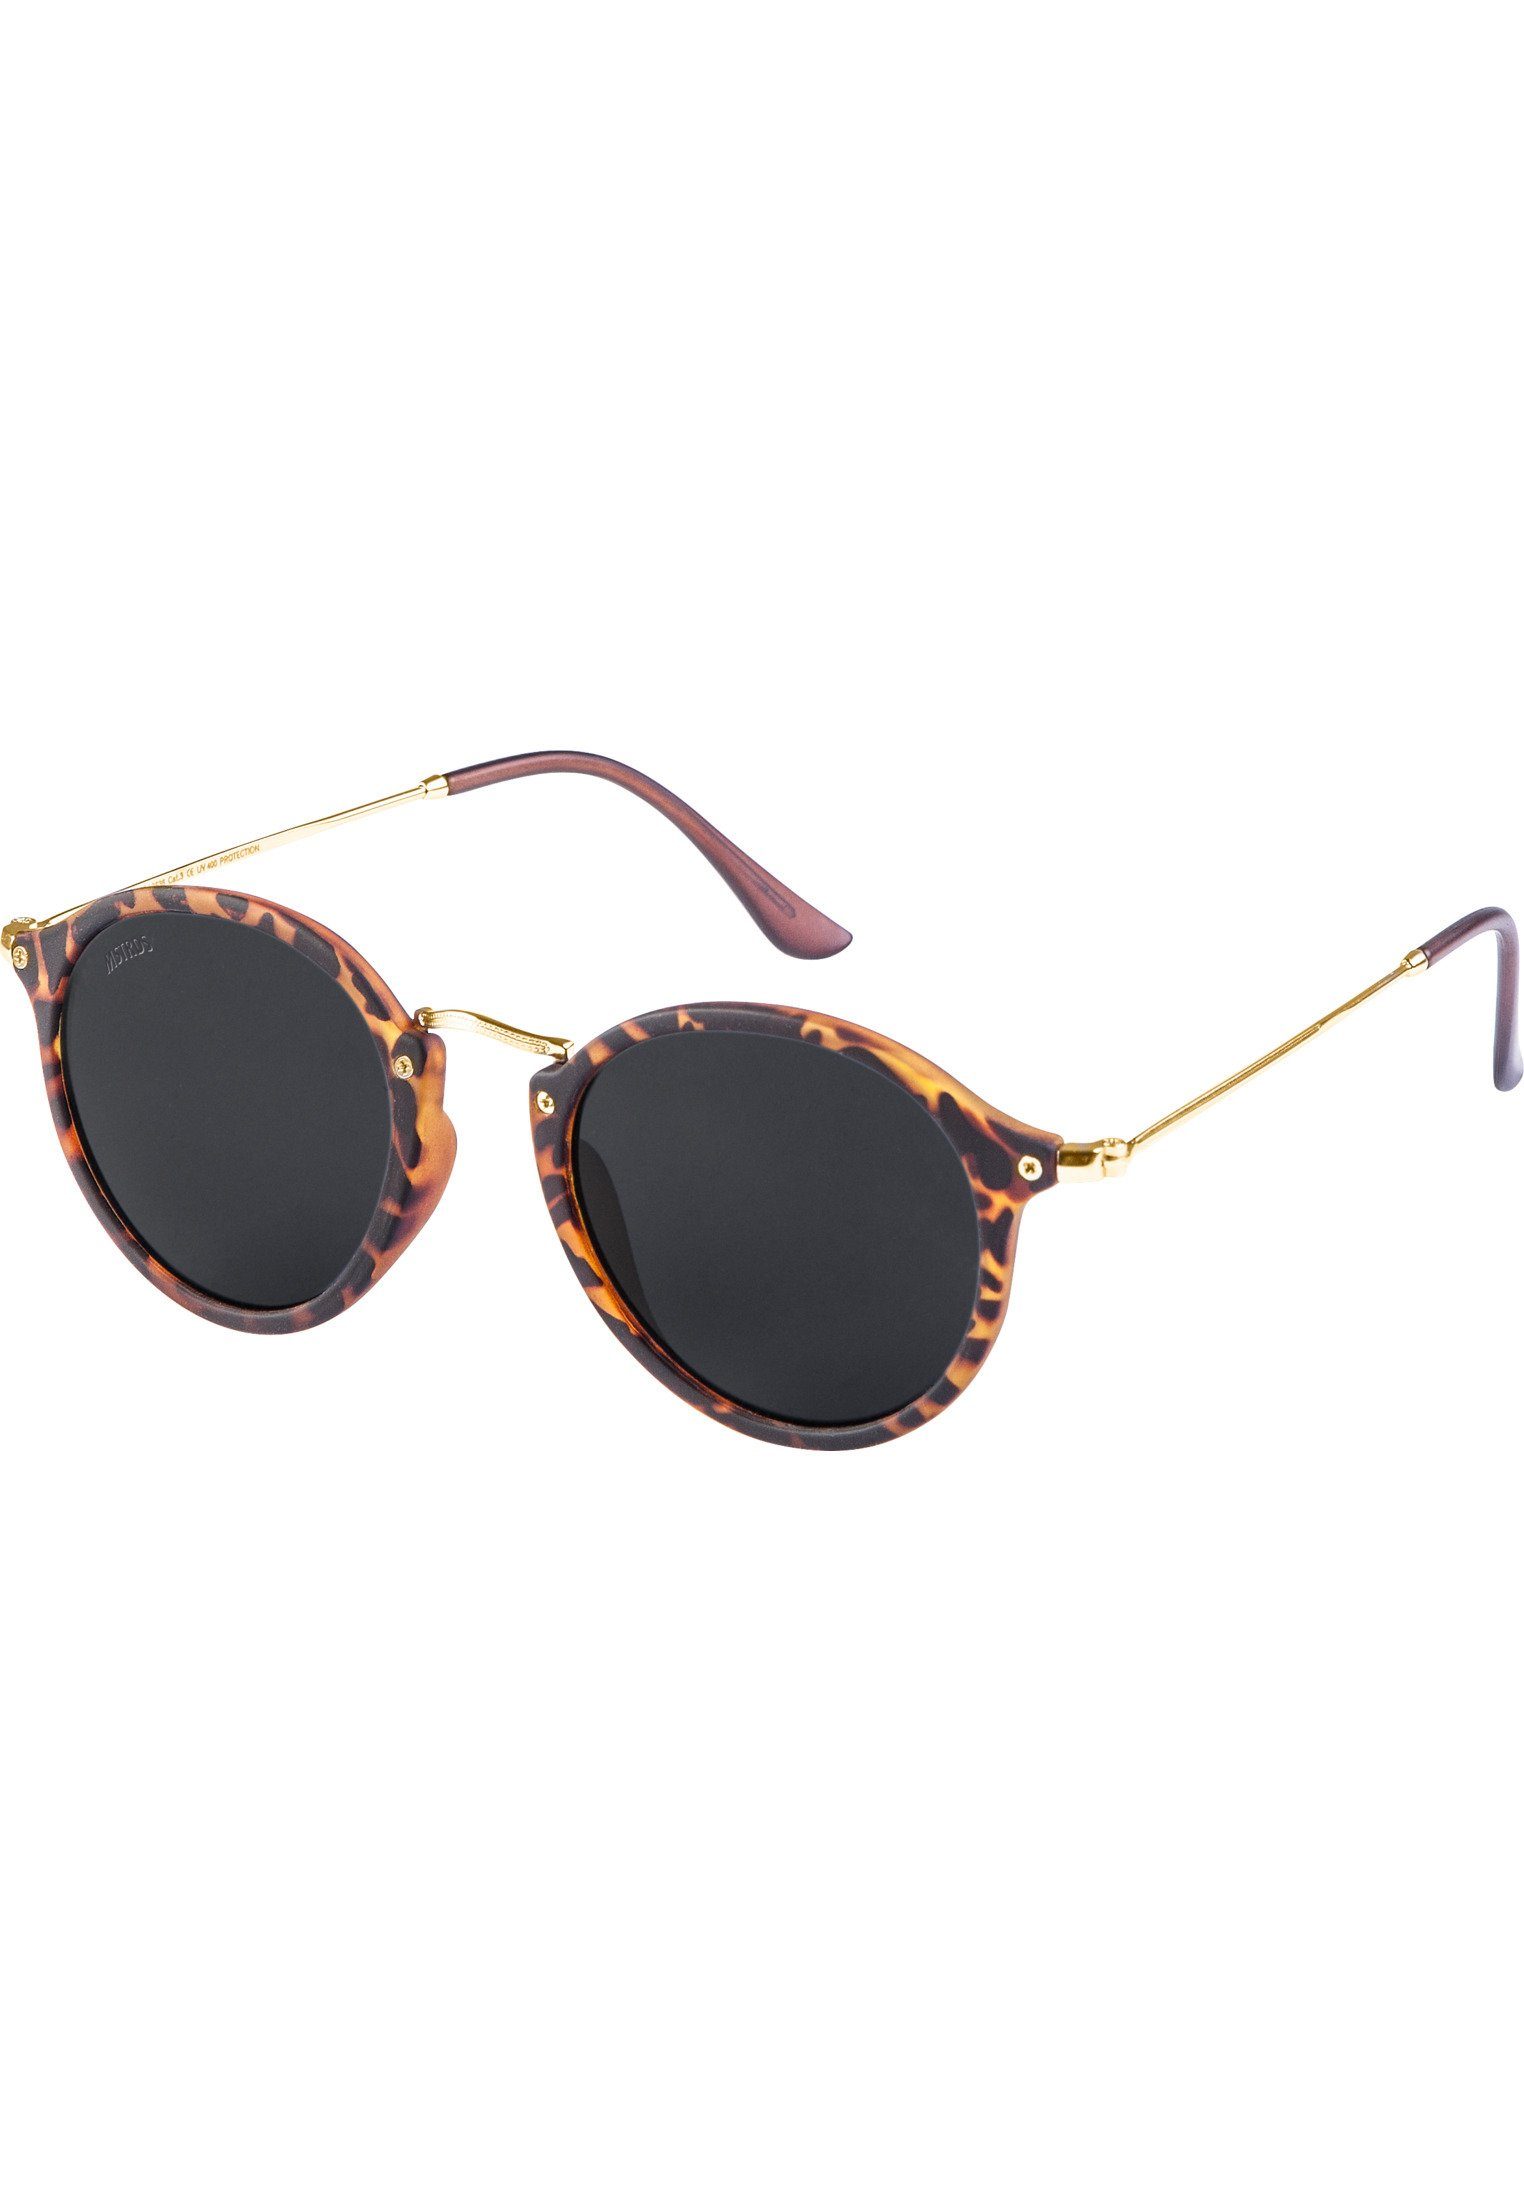 Sonnenbrille Sunglasses MSTRDS Spy Accessoires havanna/grey